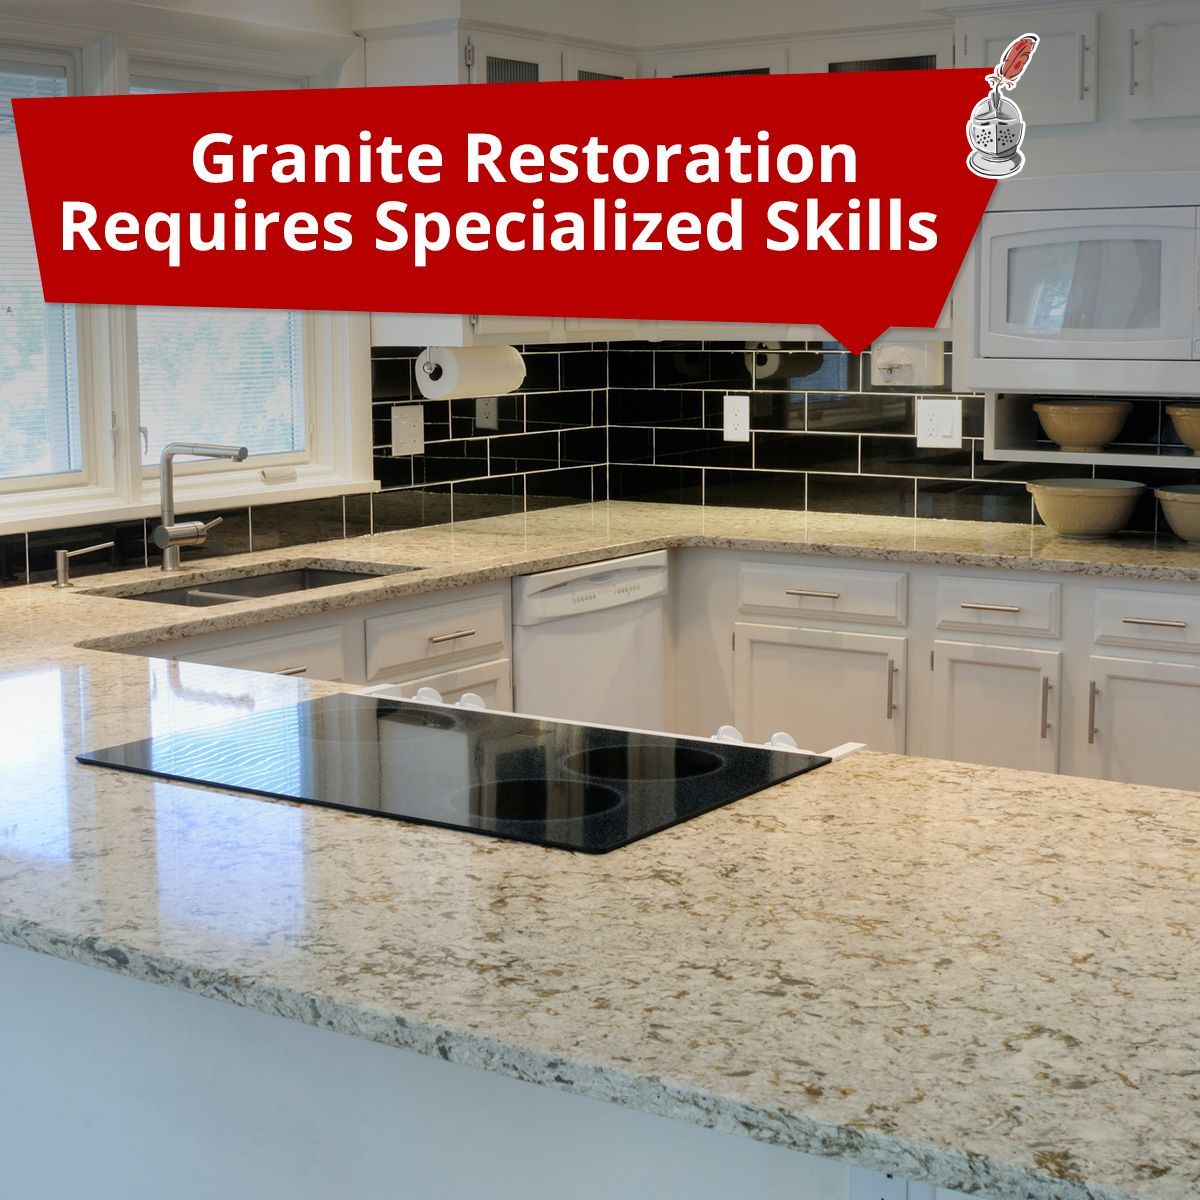 Granite Restoration Requires Specialized Skills